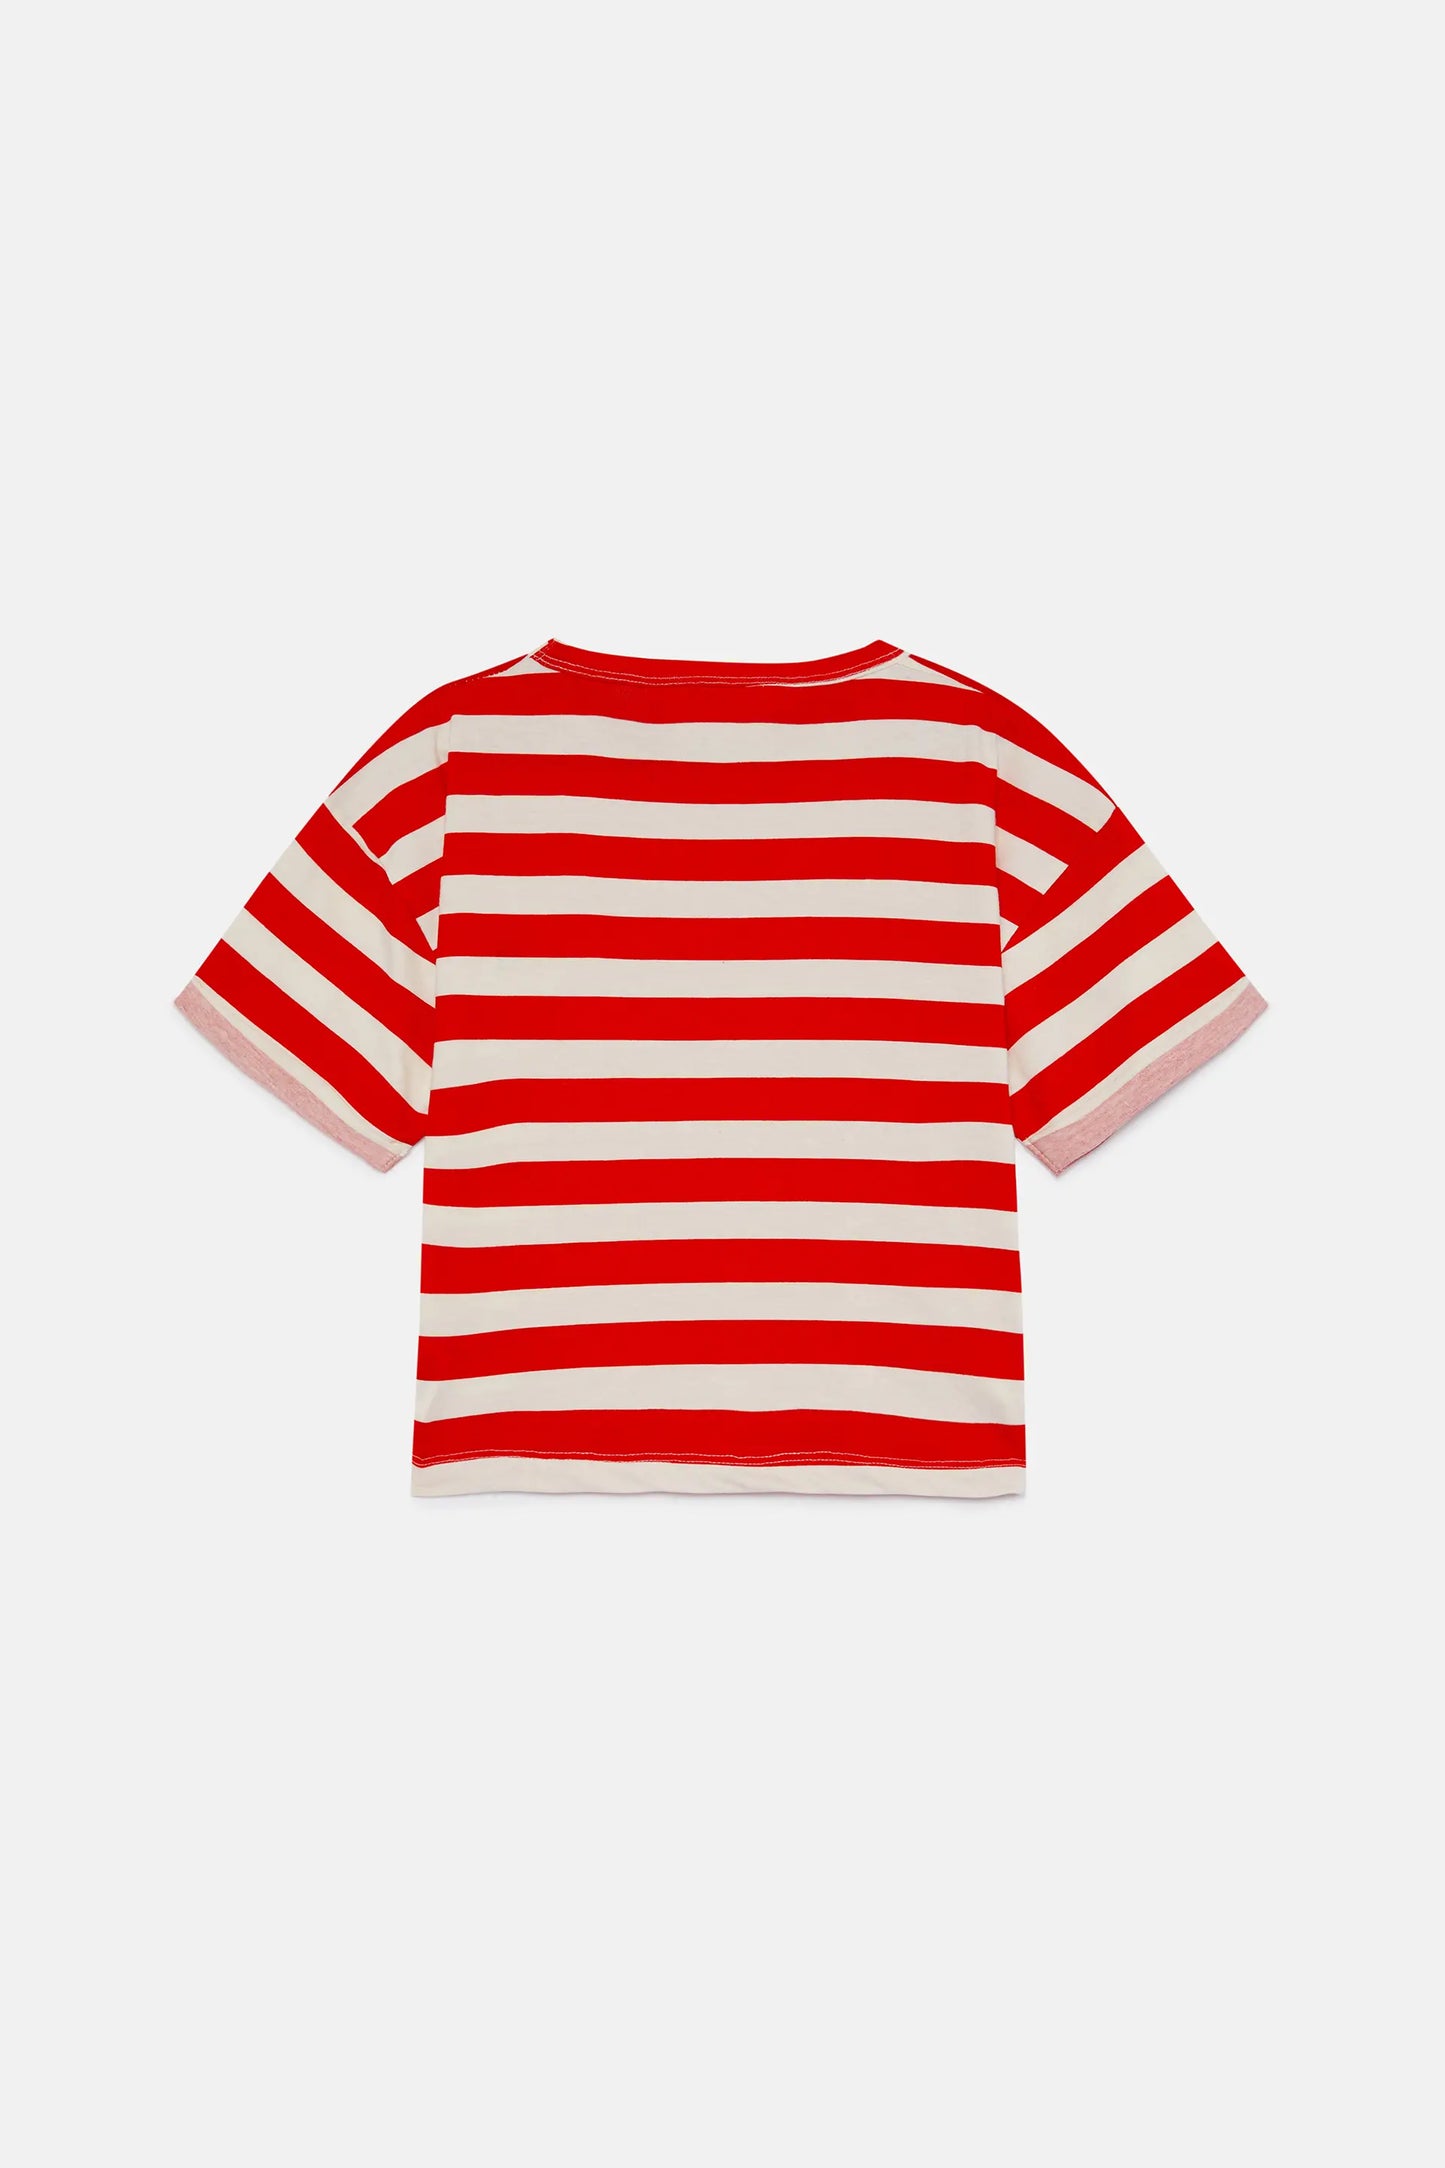 Camiseta unisex de rayas rojas